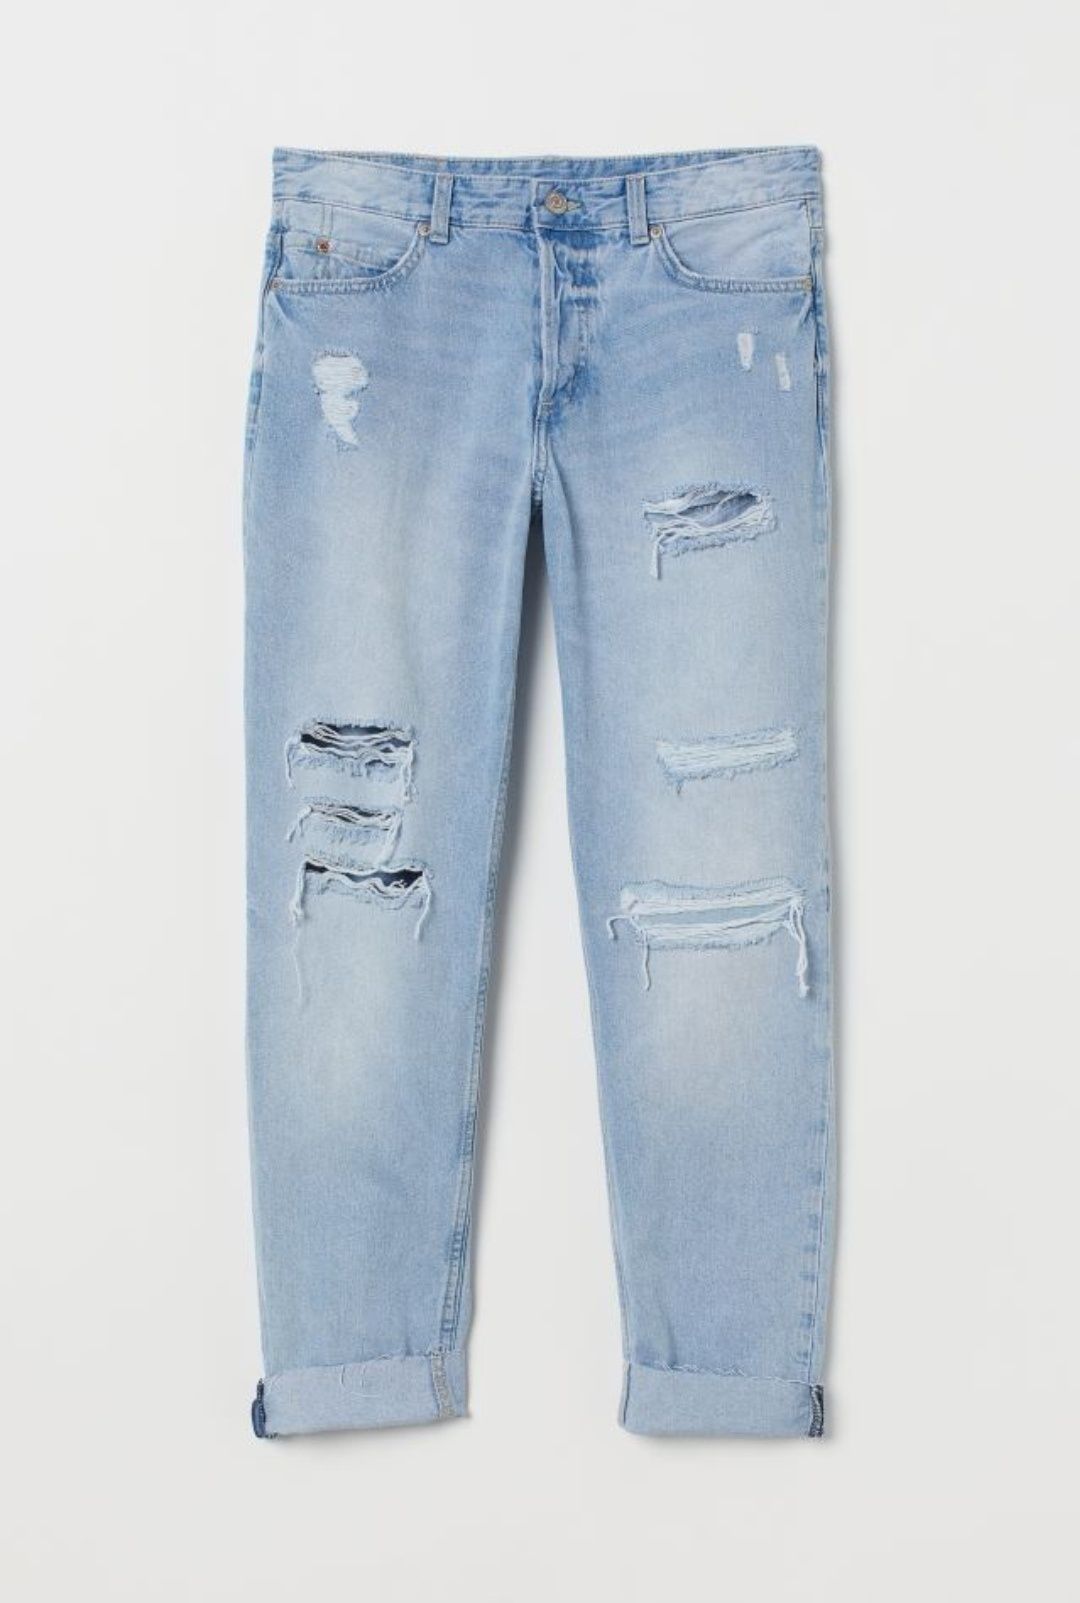 Blugi Boyfriend Low Jeans H&M mărime 32